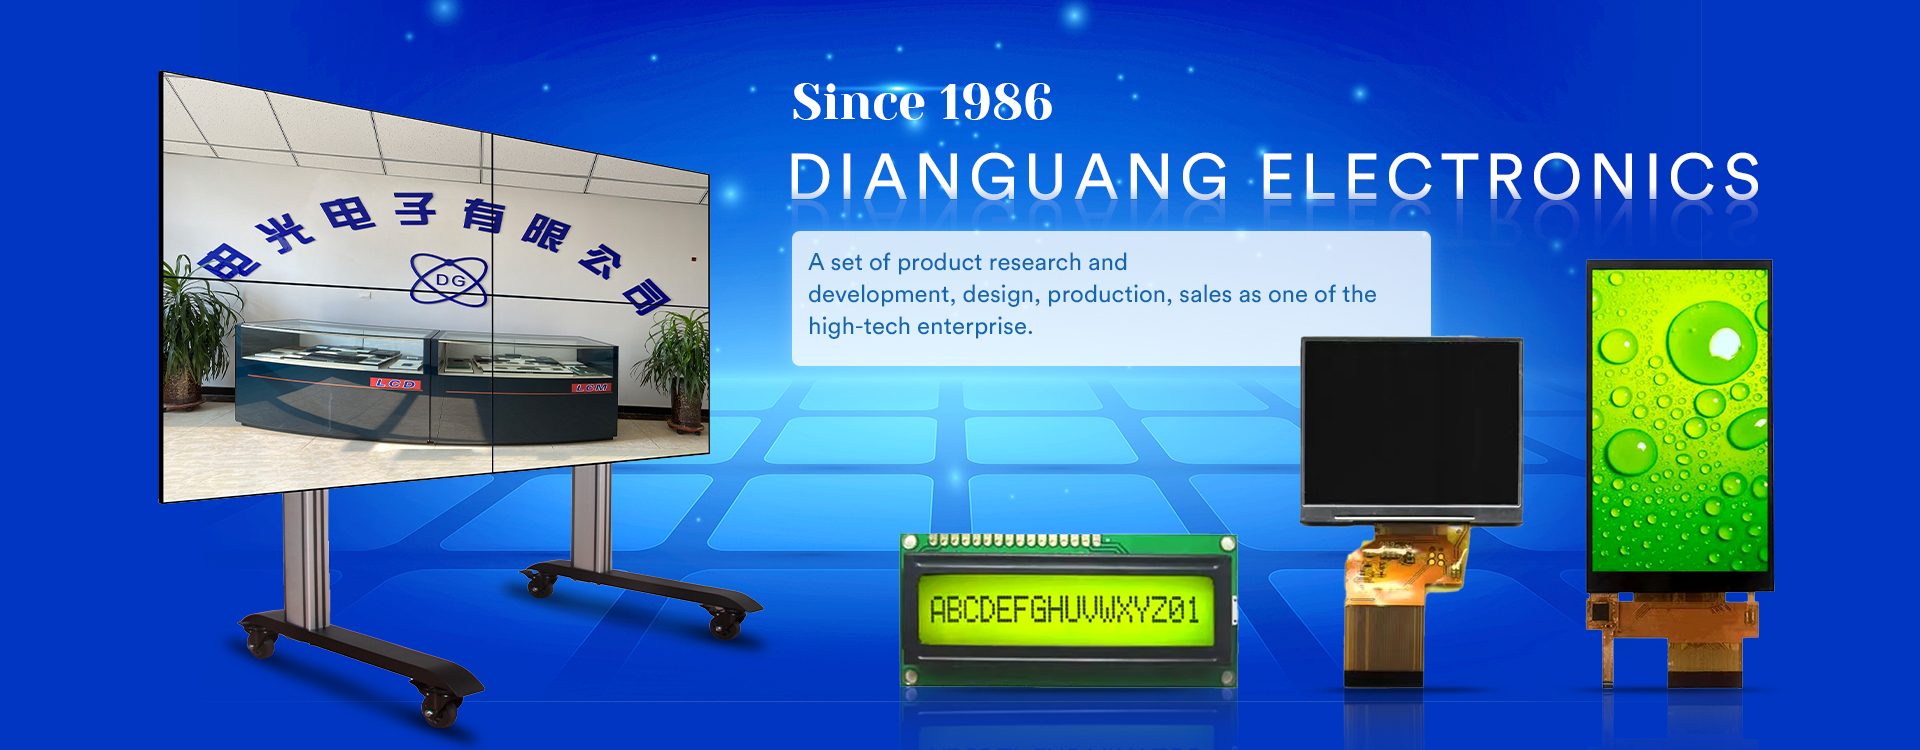 Dianguang Electronics Co., Ltd.